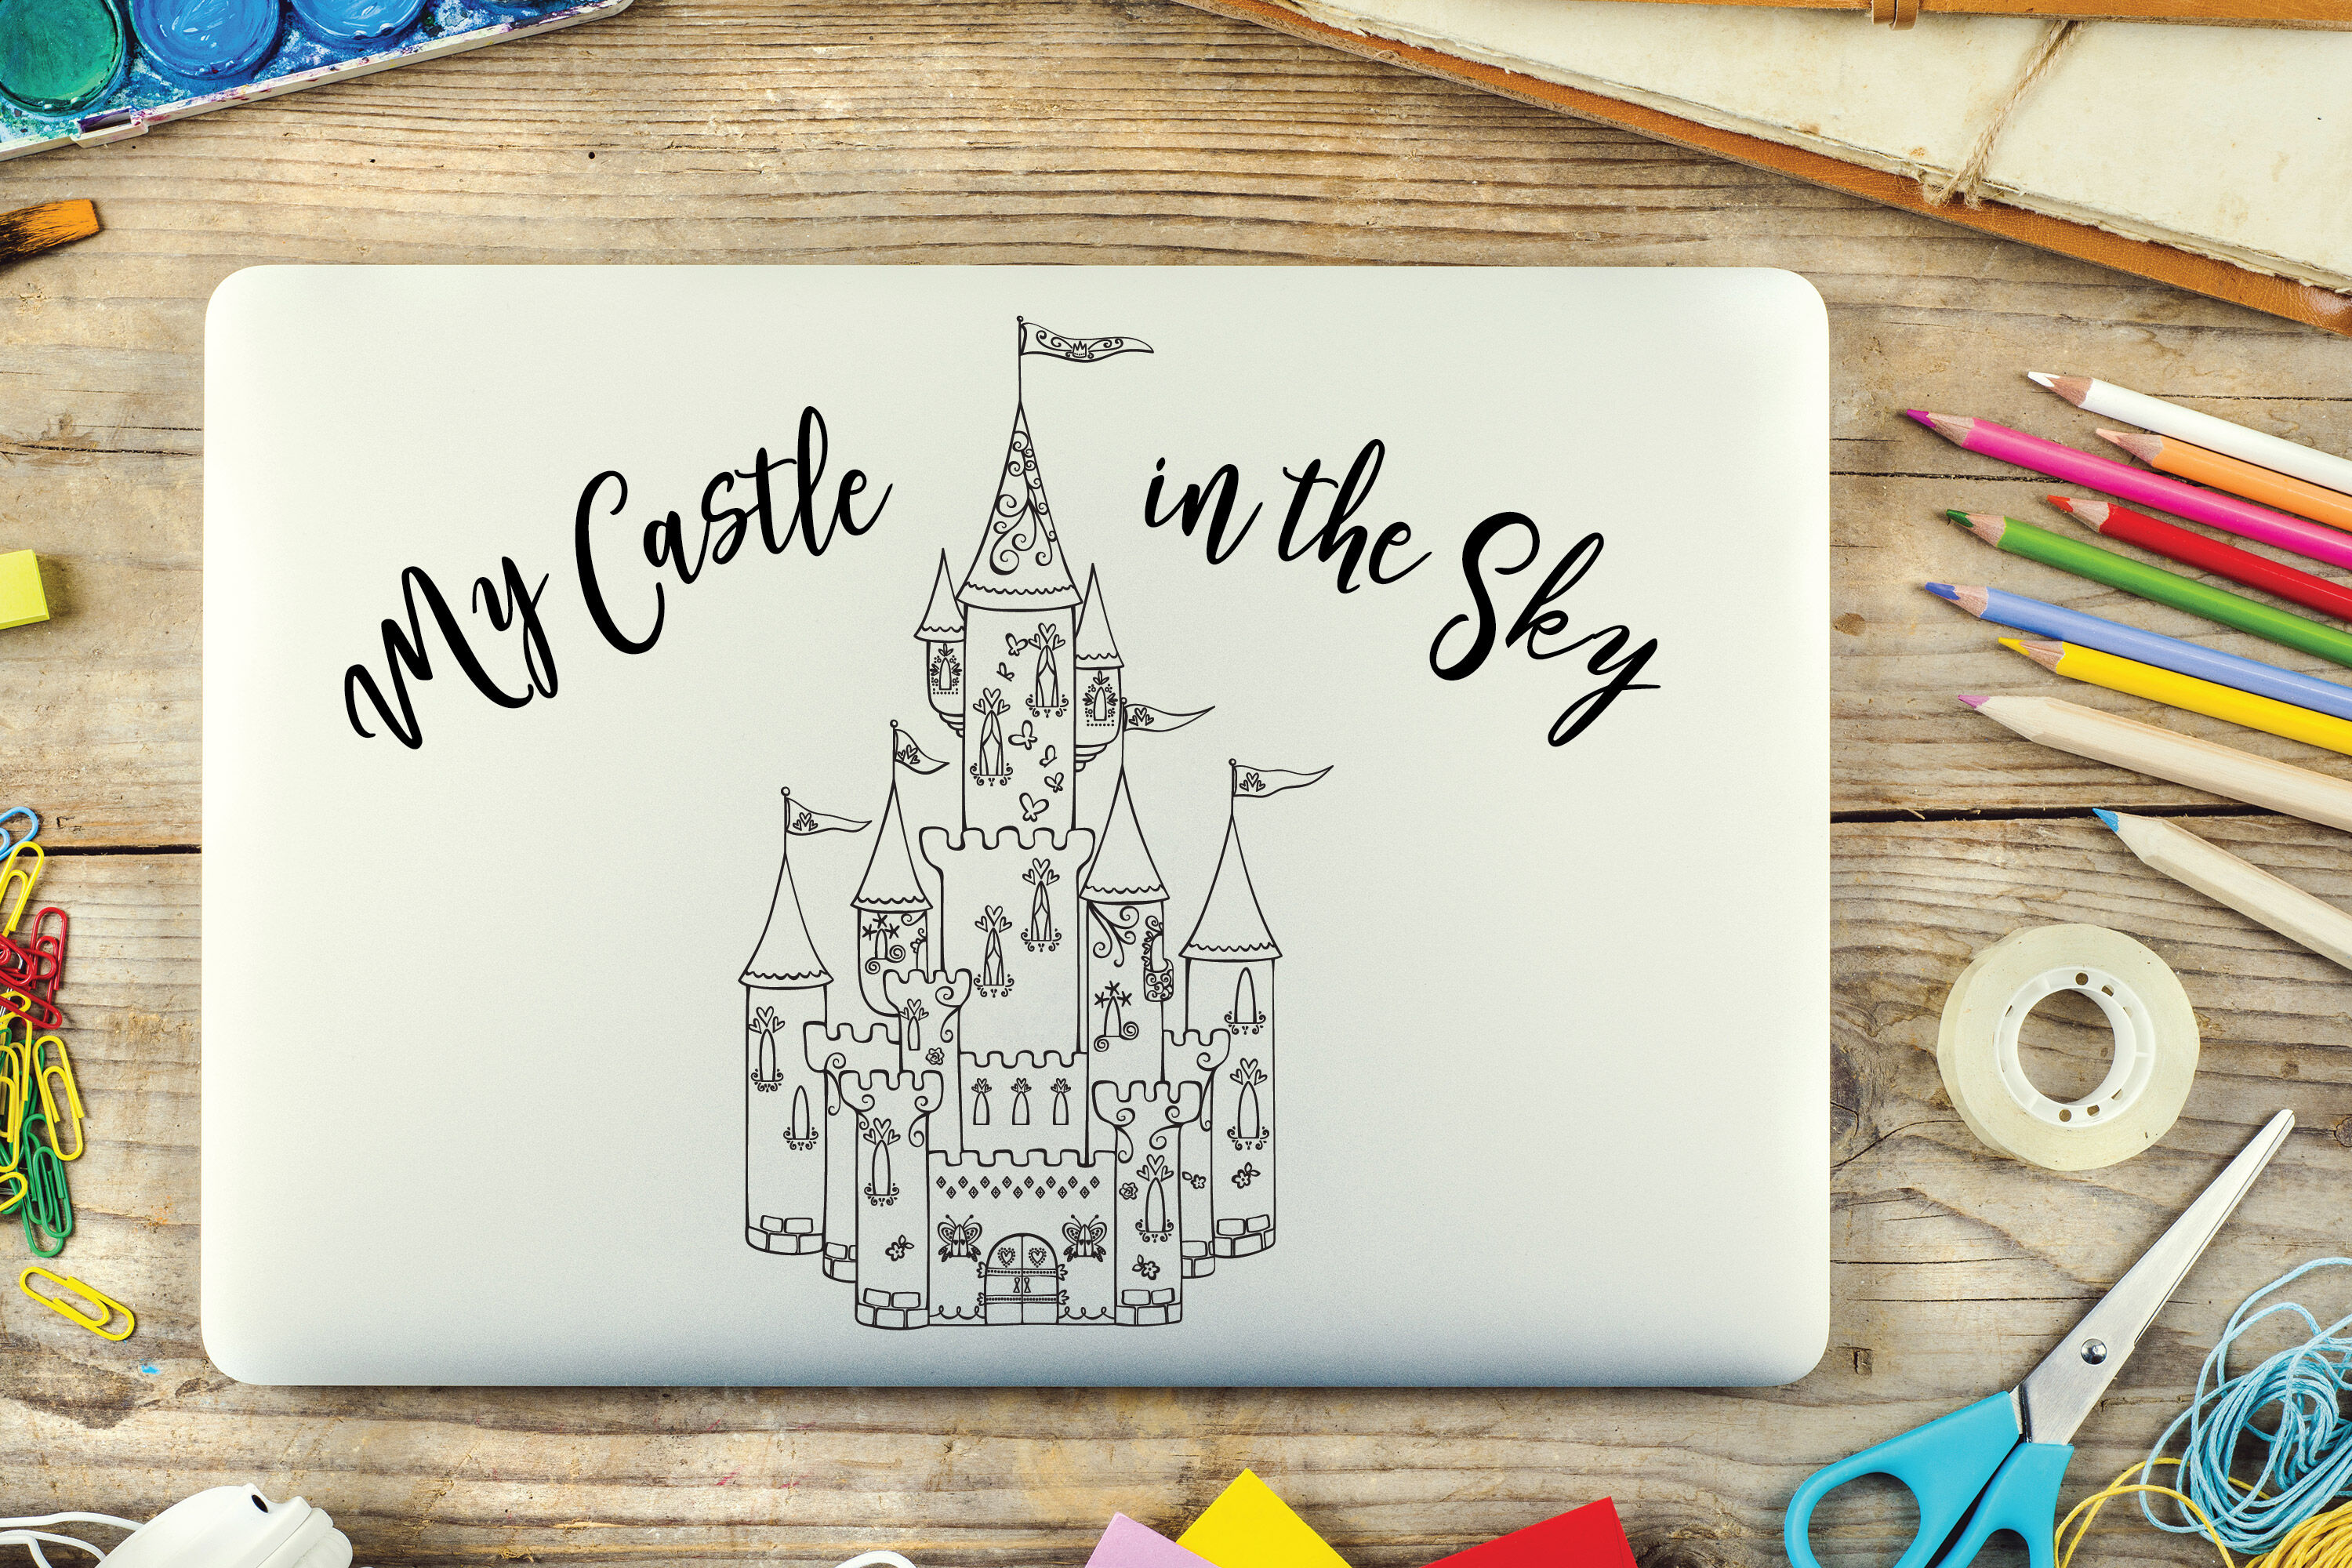 Hand Drawn Castle Clip Art Princess Royal Palace By Digital Draw Studio Thehungryjpeg Com